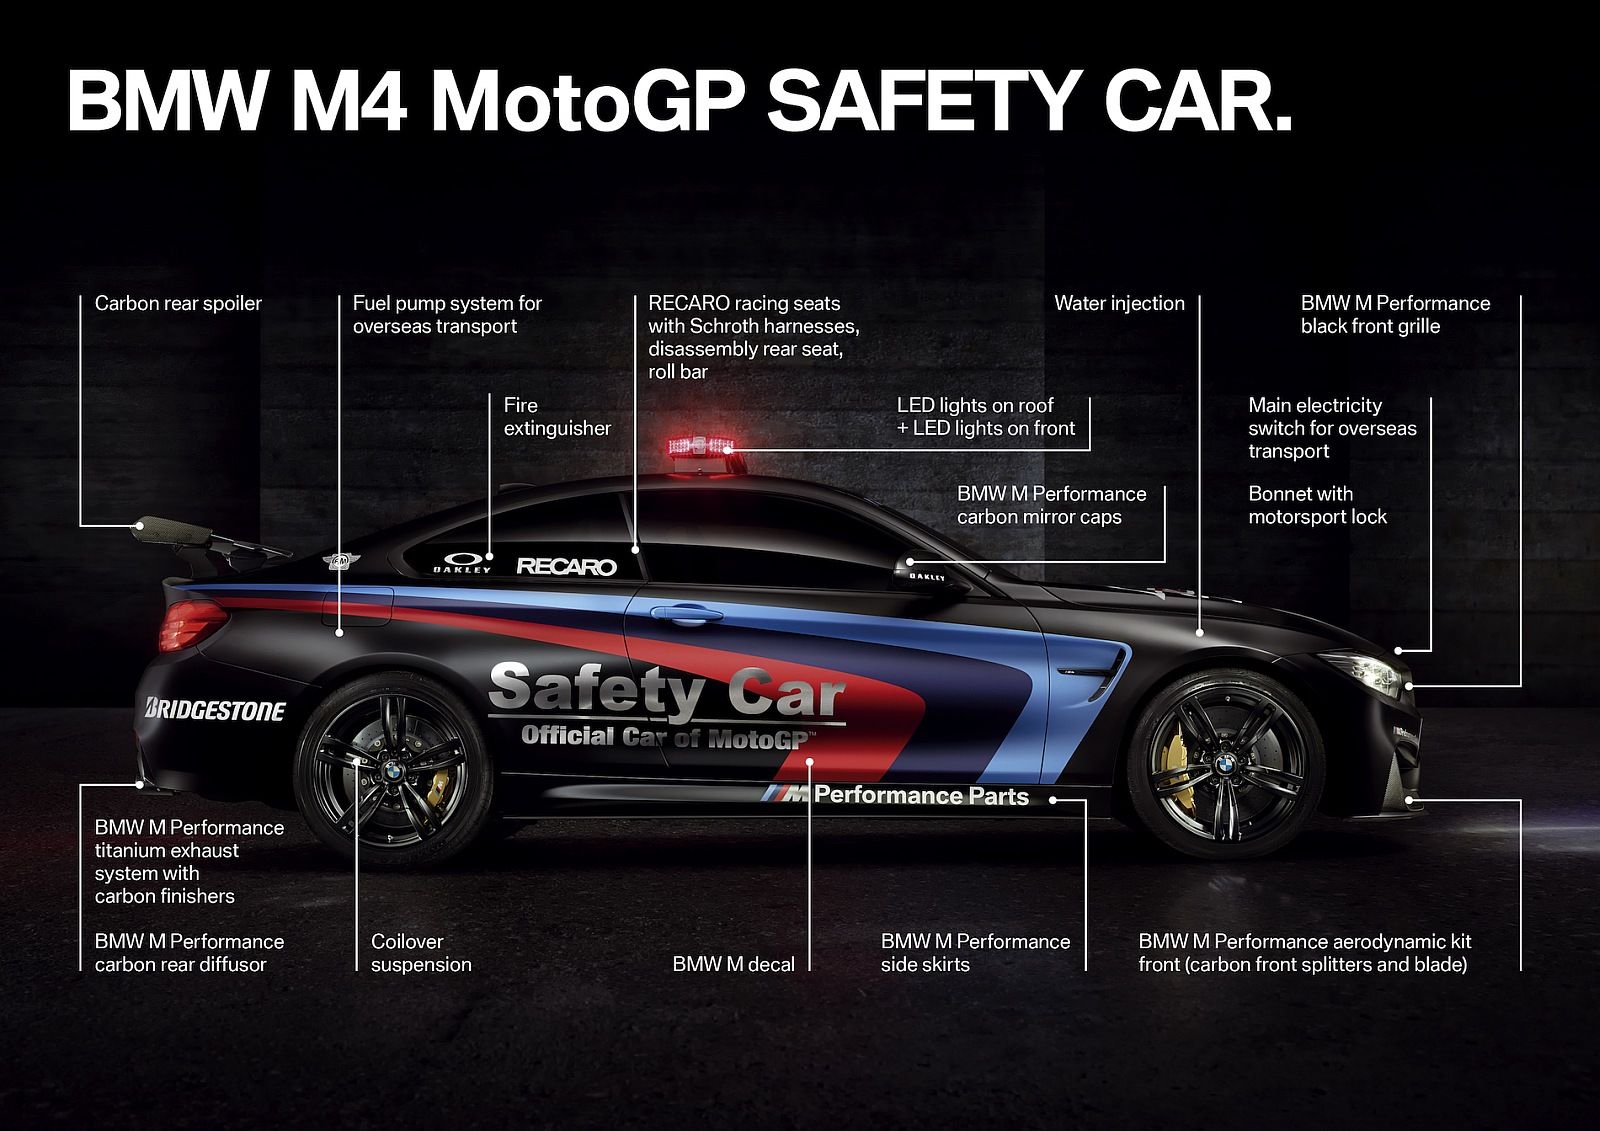 2015 BMW M4 MotoGP safety car